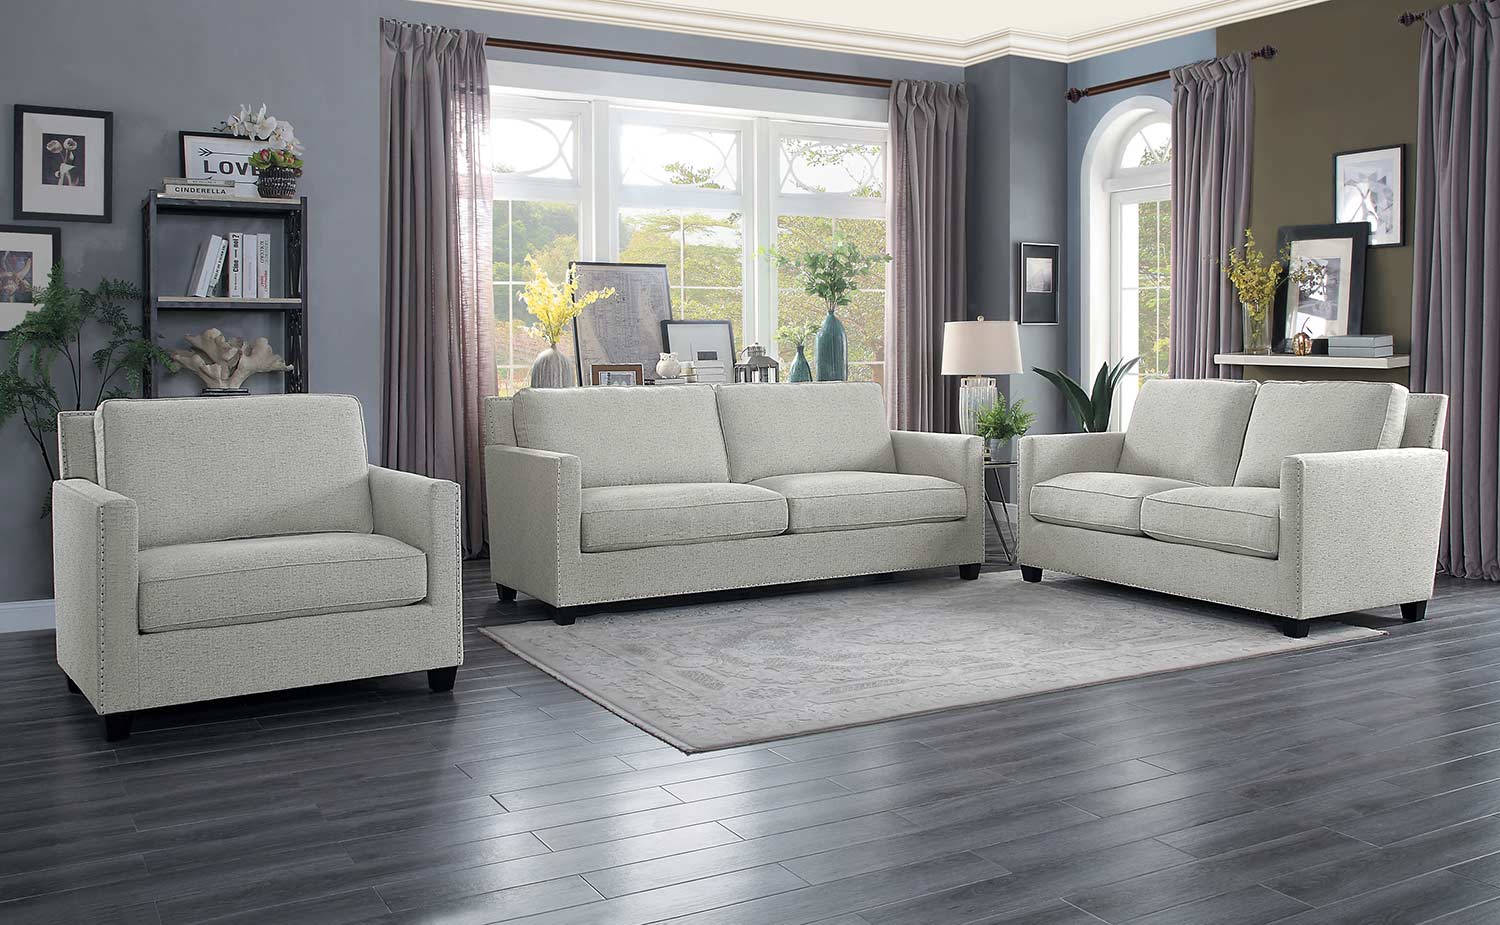 Homelegance Pickerington Sofa Set - Light gray